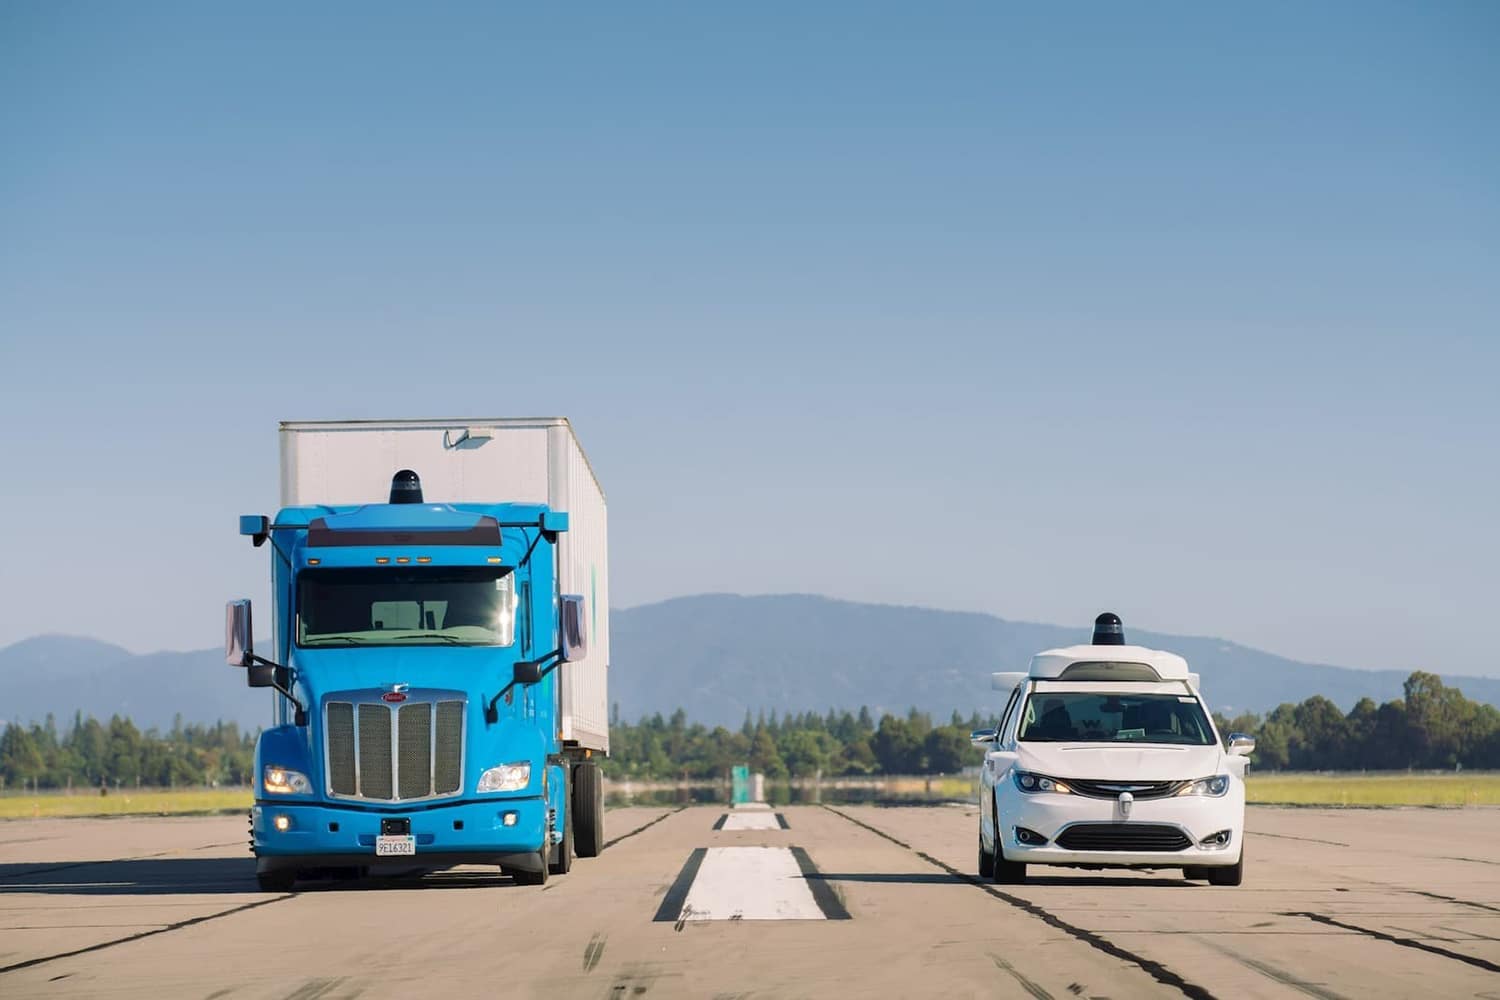 Waymo's self-driving truck and Chrysler Pacifica minivan.